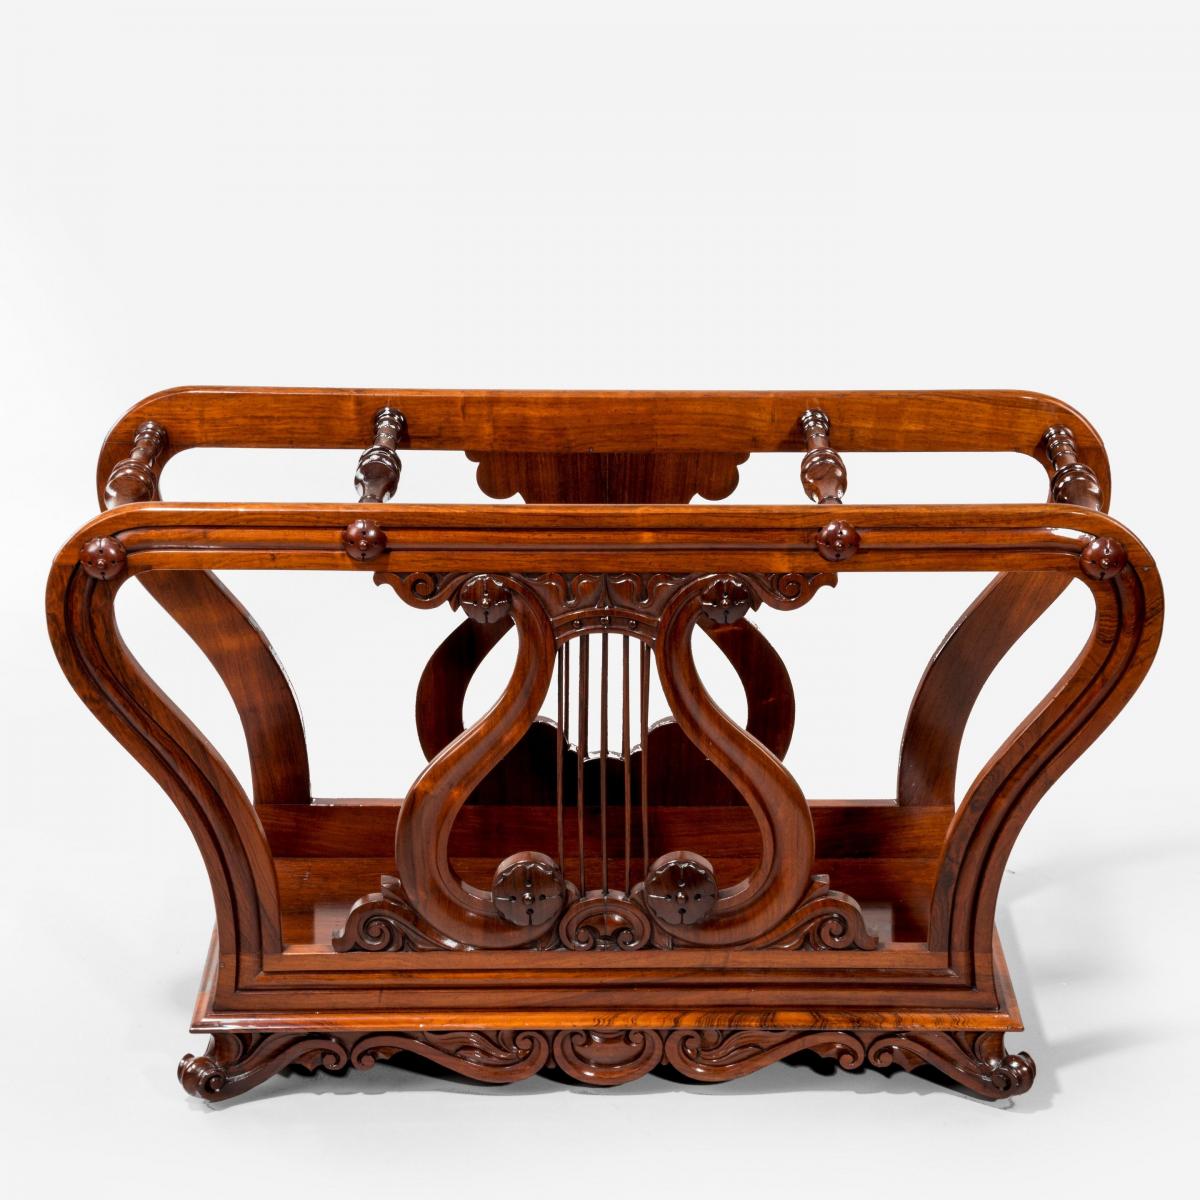 An unusual late Regency rosewood music roll holder